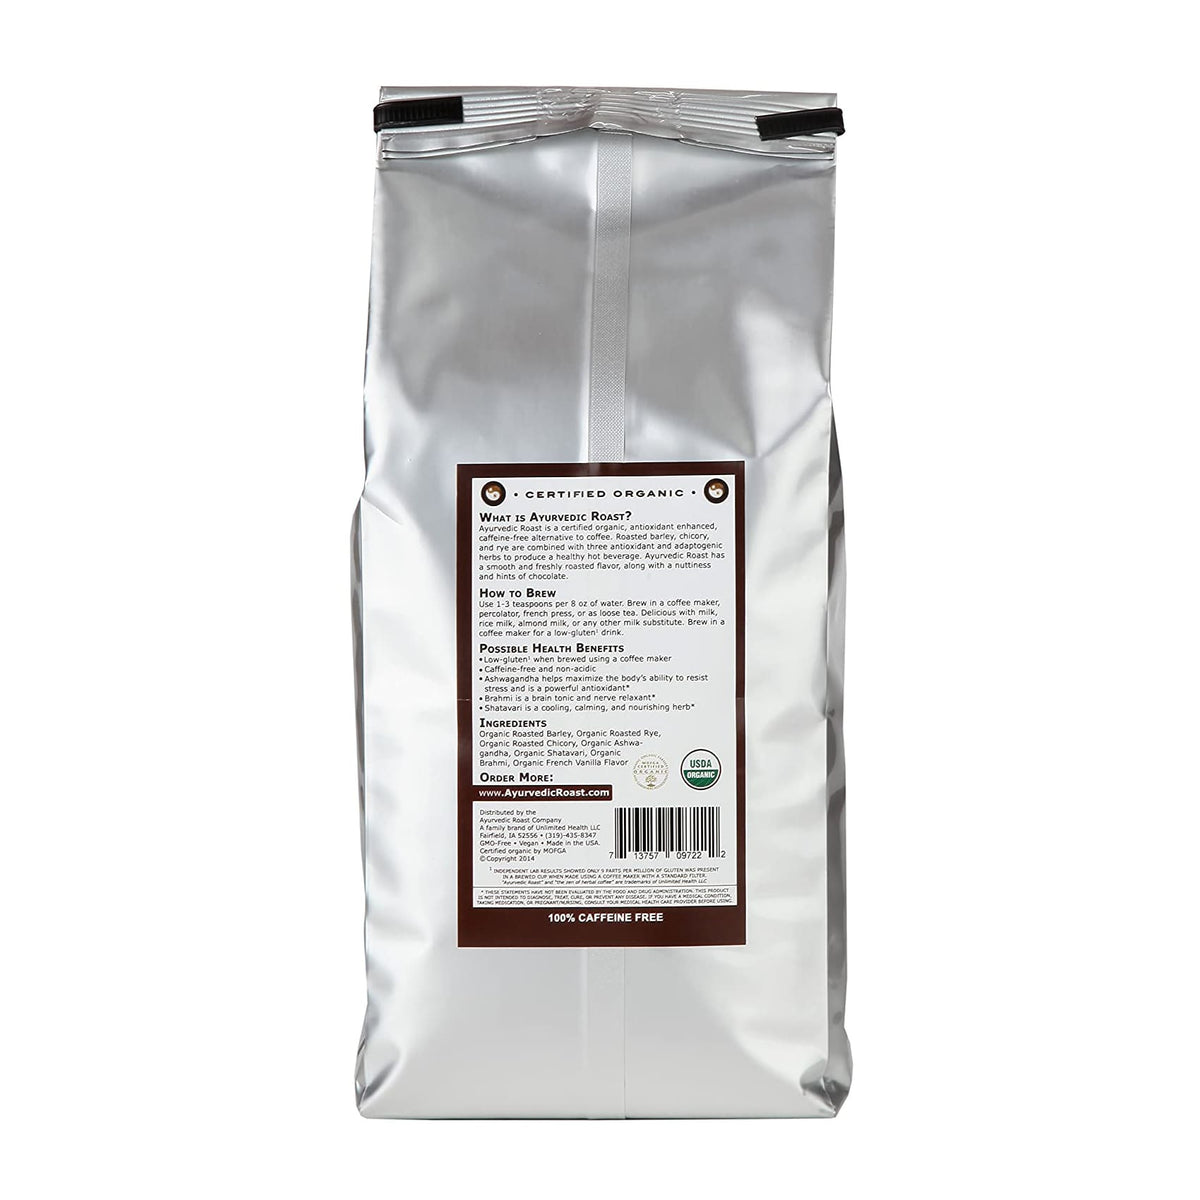 Ayurvedic Roast - French Vanilla Flavor Organic Herbal Coffee Substitute - Only Tasty Goods Inc.